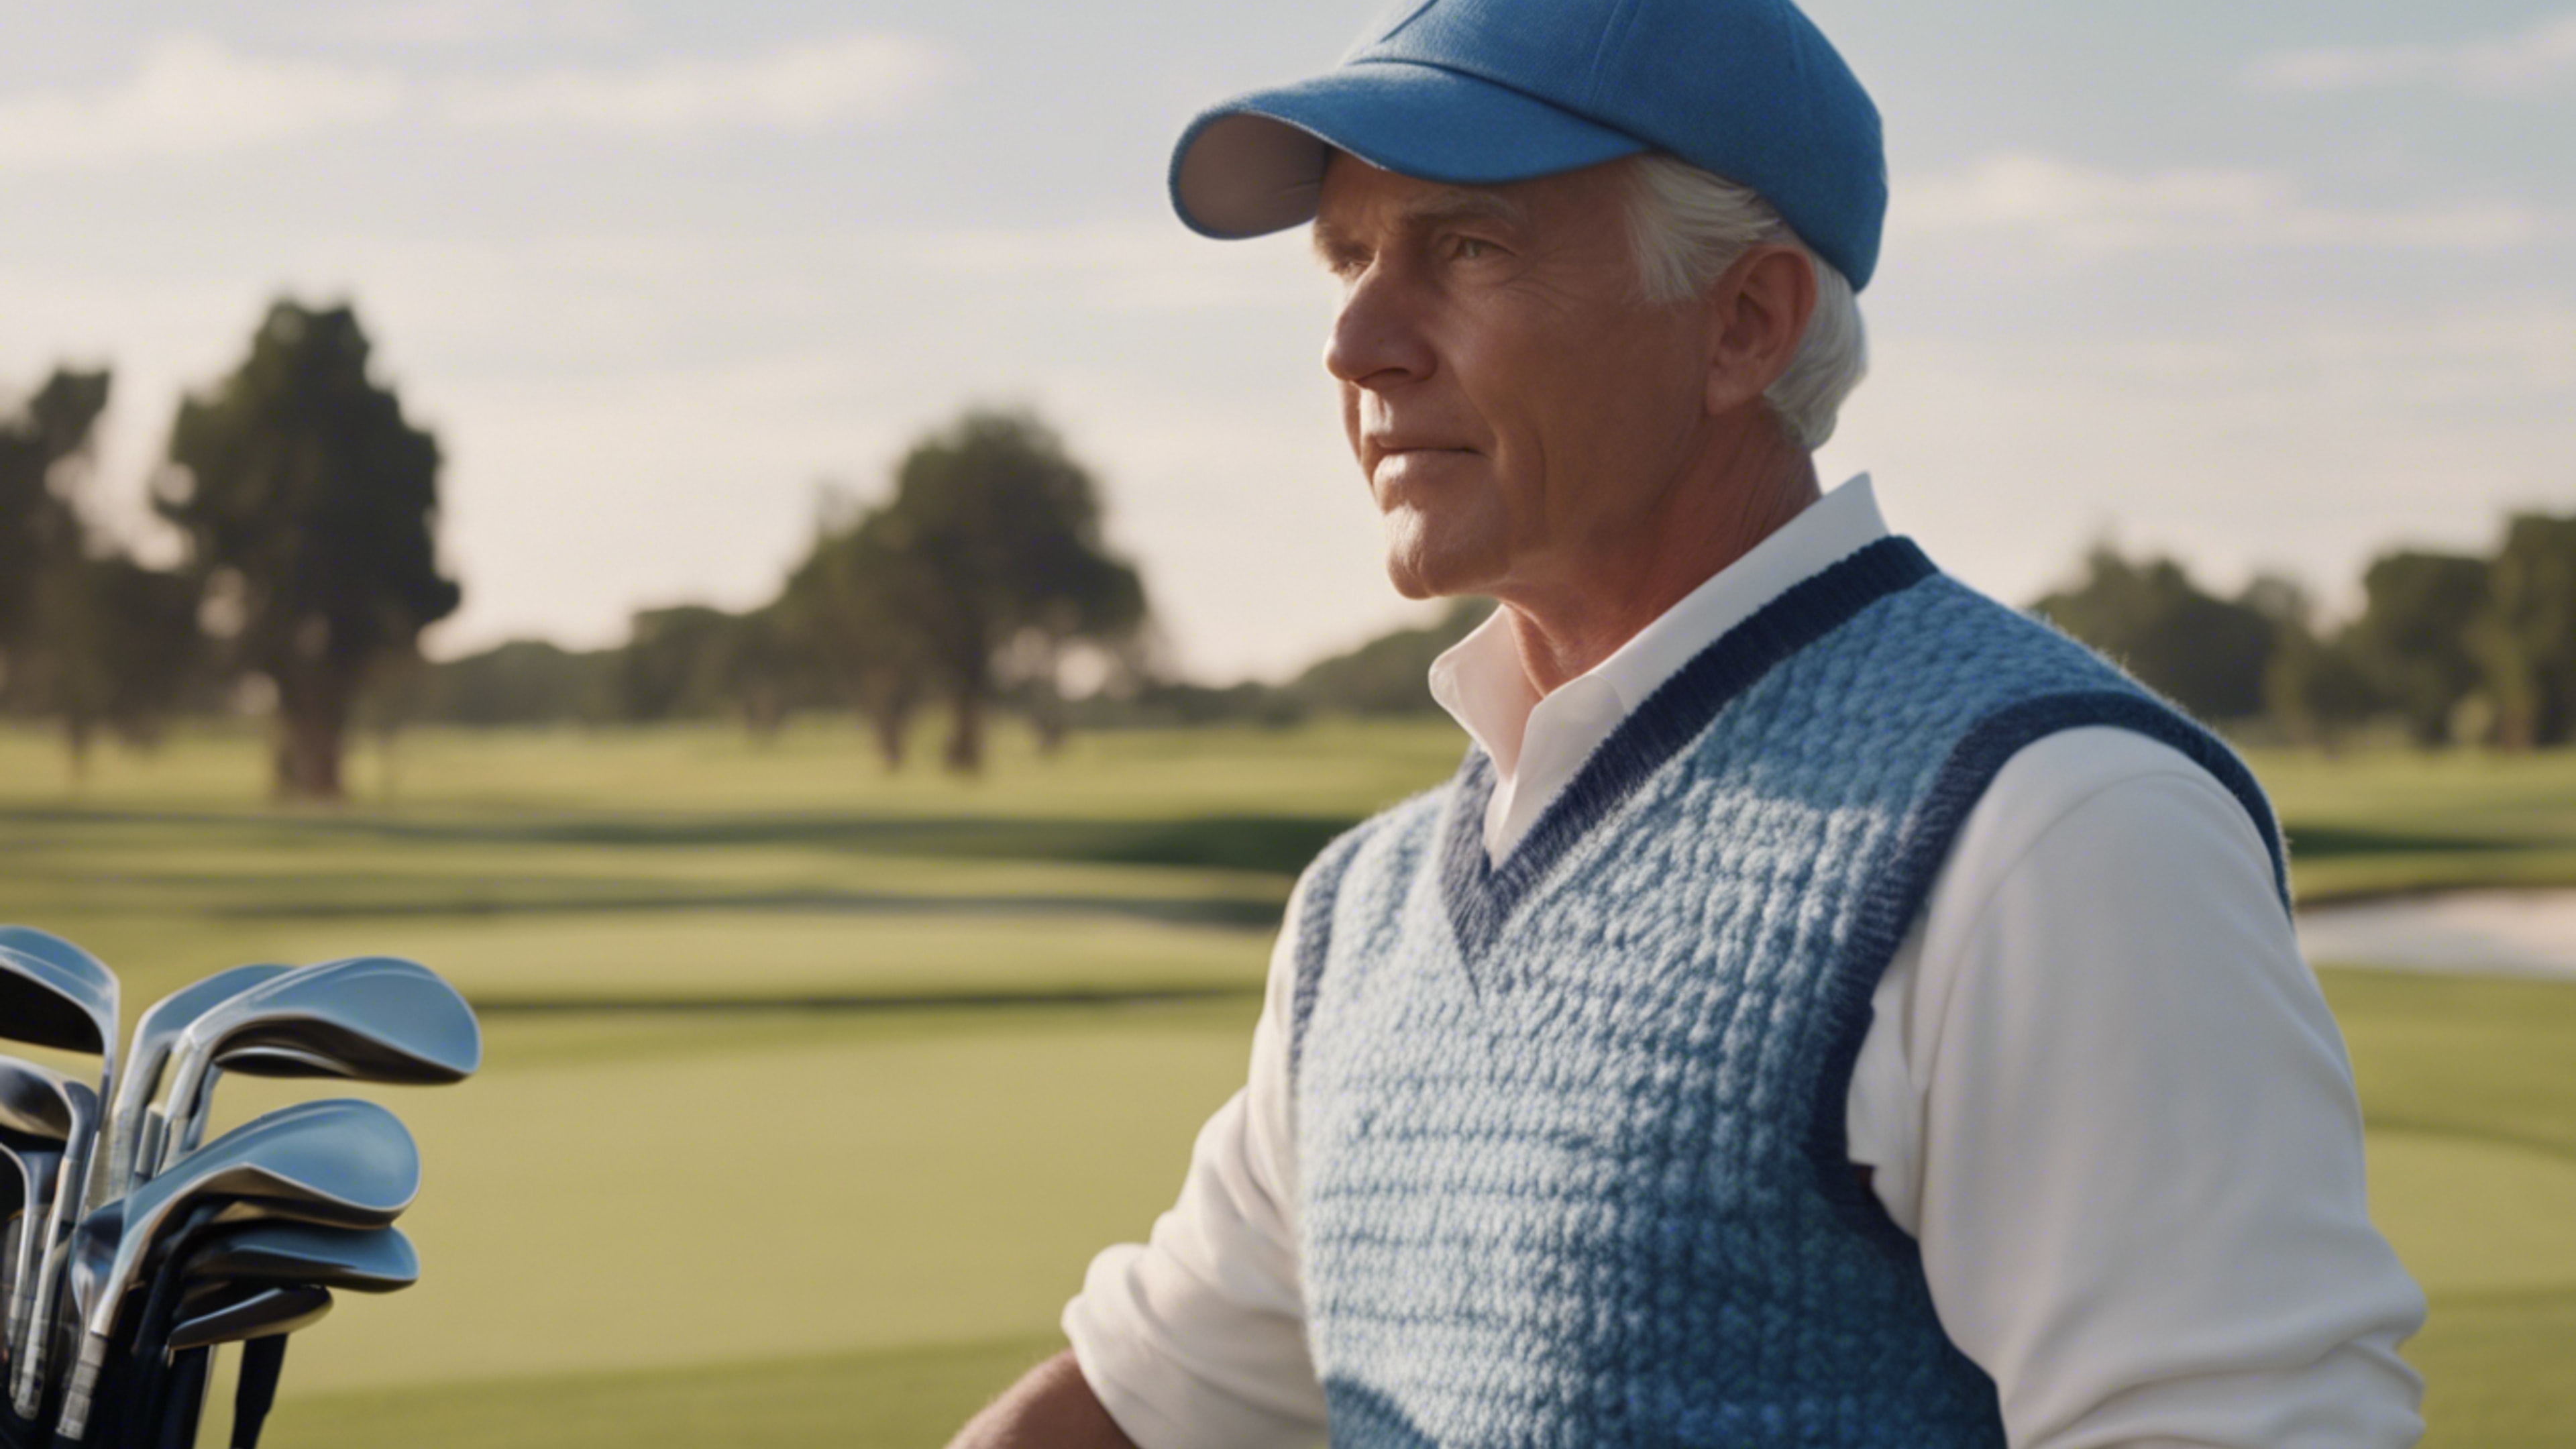 A preppy gentleman playing golf, wearing a crisp blue sweater vest, white trousers, and a blue plaid golf cap.壁紙[e529d0abba9b41109f82]